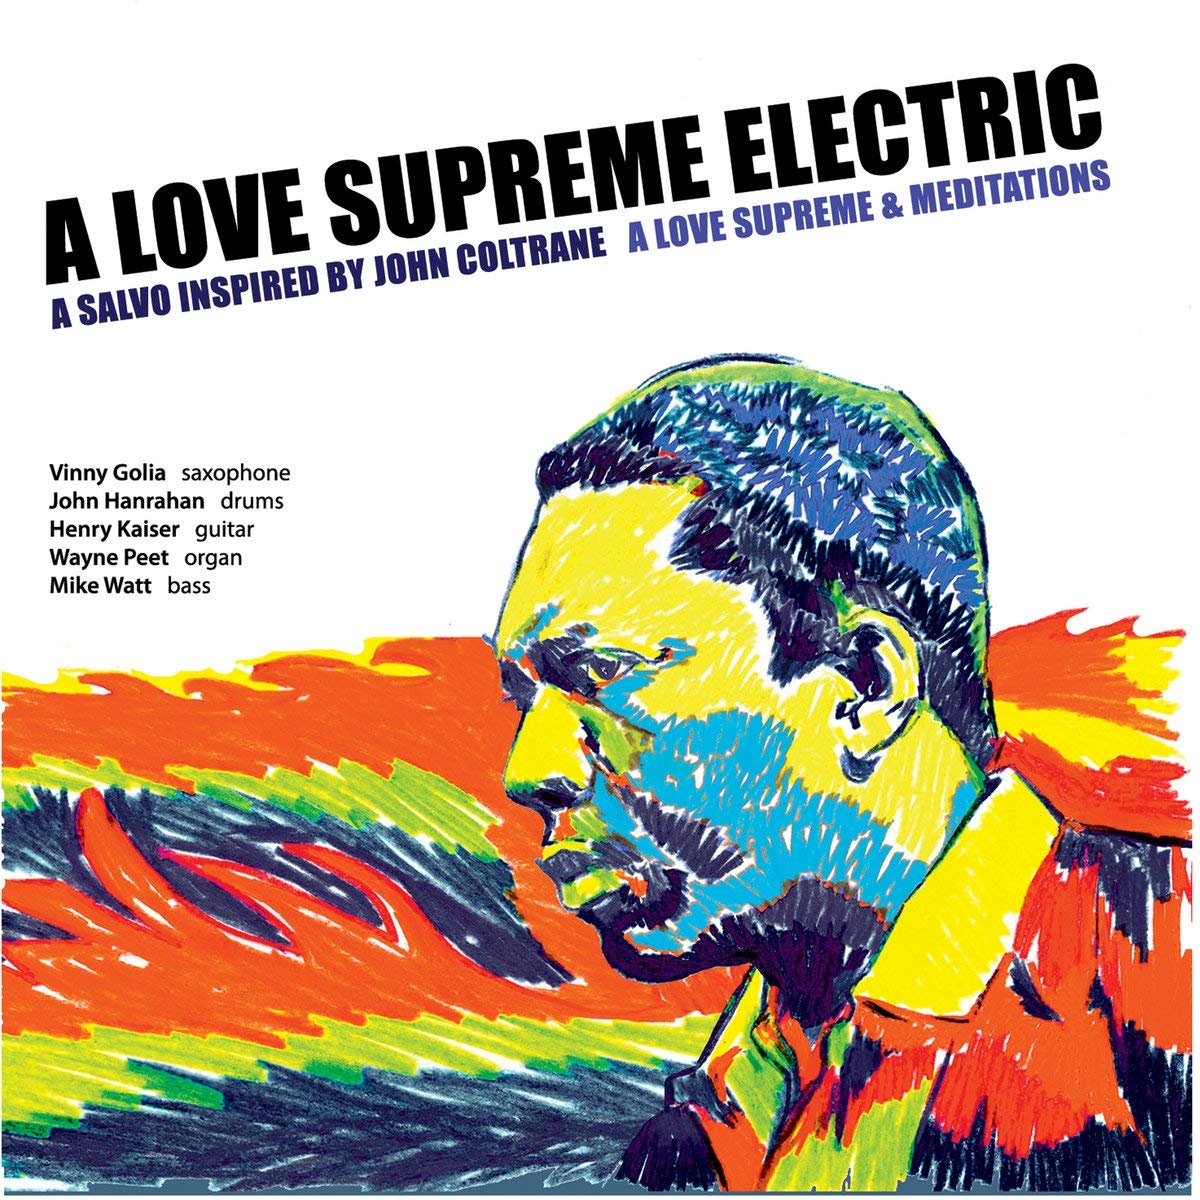 A Love Supreme Electric - A Love Supreme & Meditations